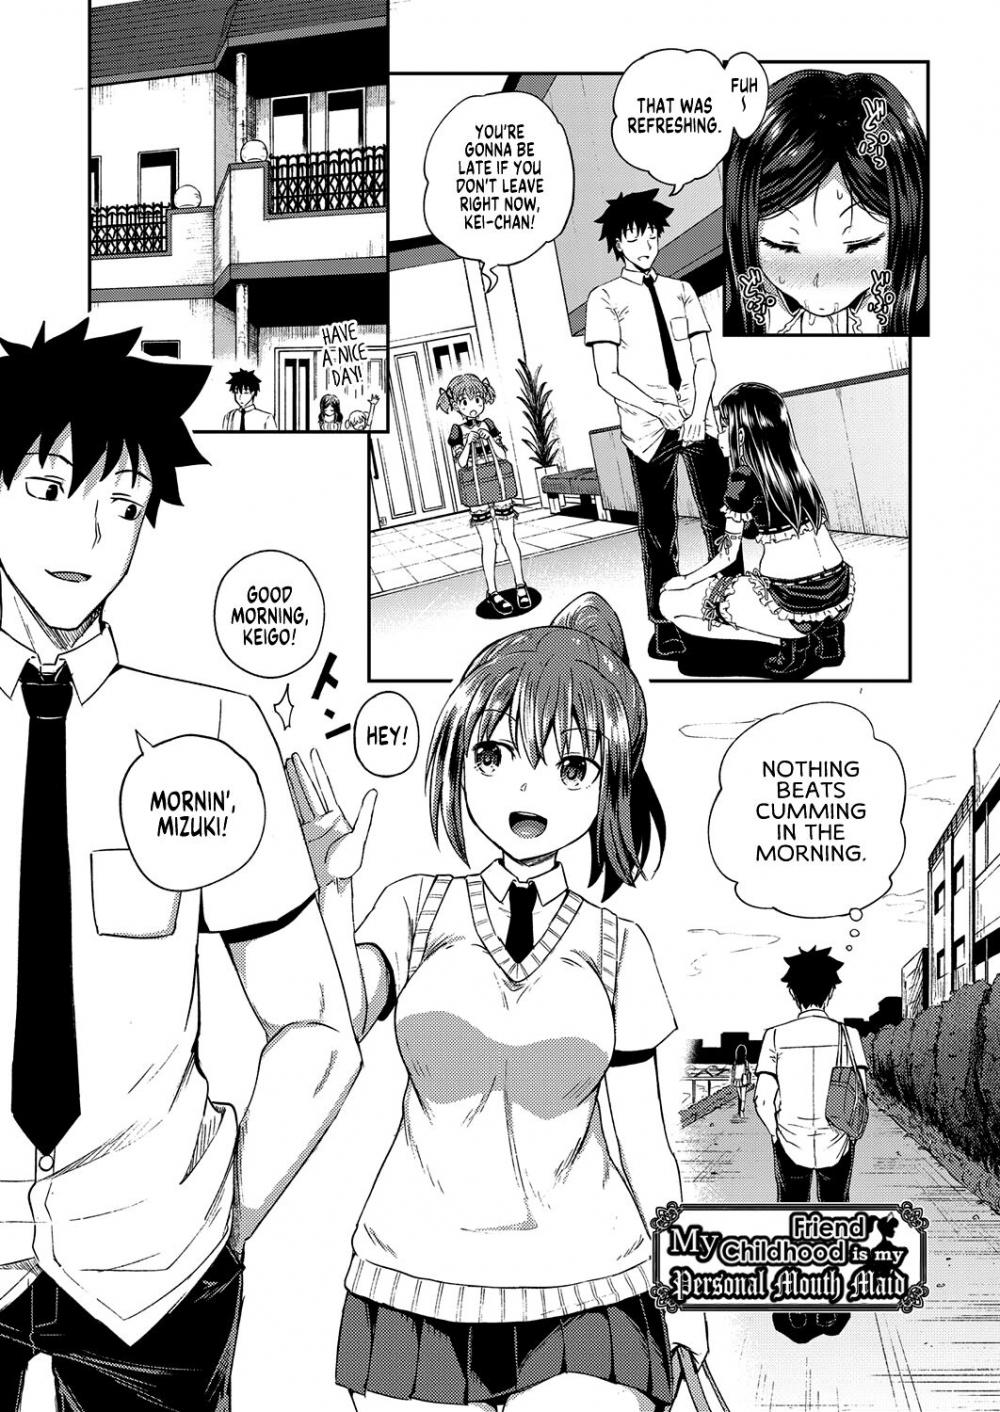 Hentai Manga Comic-My Childhood Friend is my Personal Mouth Maid-v22m-v22m-v22m-Chapter 1-2